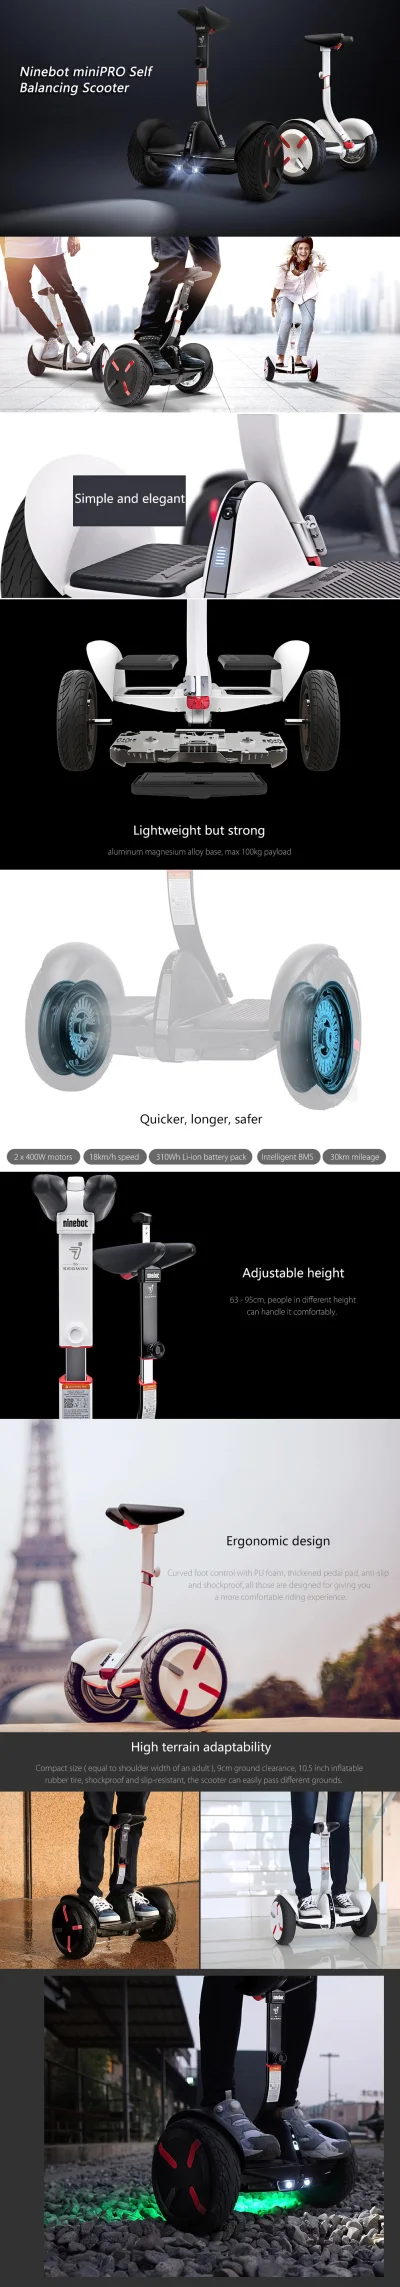 eternaljassie - Segway Ninebot miniPRO 10.5 inch 2-wheel Self Balancing Scooter - BLA...